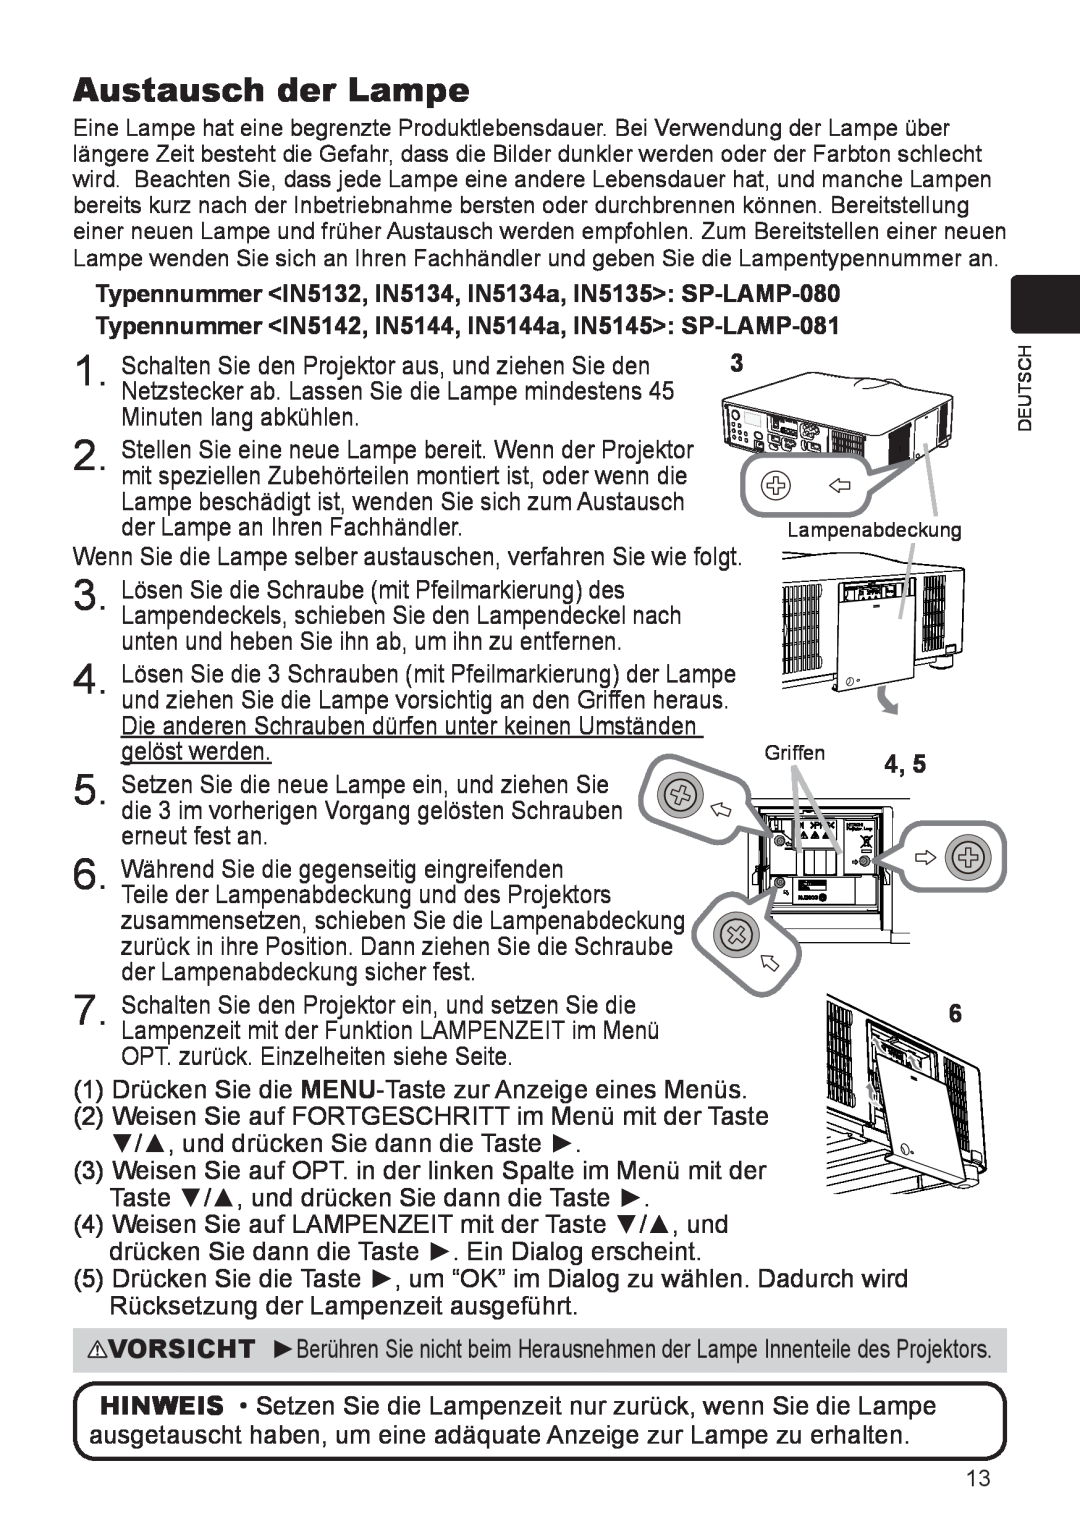 InFocus user manual Austausch der Lampe, Typennummer IN5132, IN5134, IN5134a, IN5135 SP-LAMP-080 